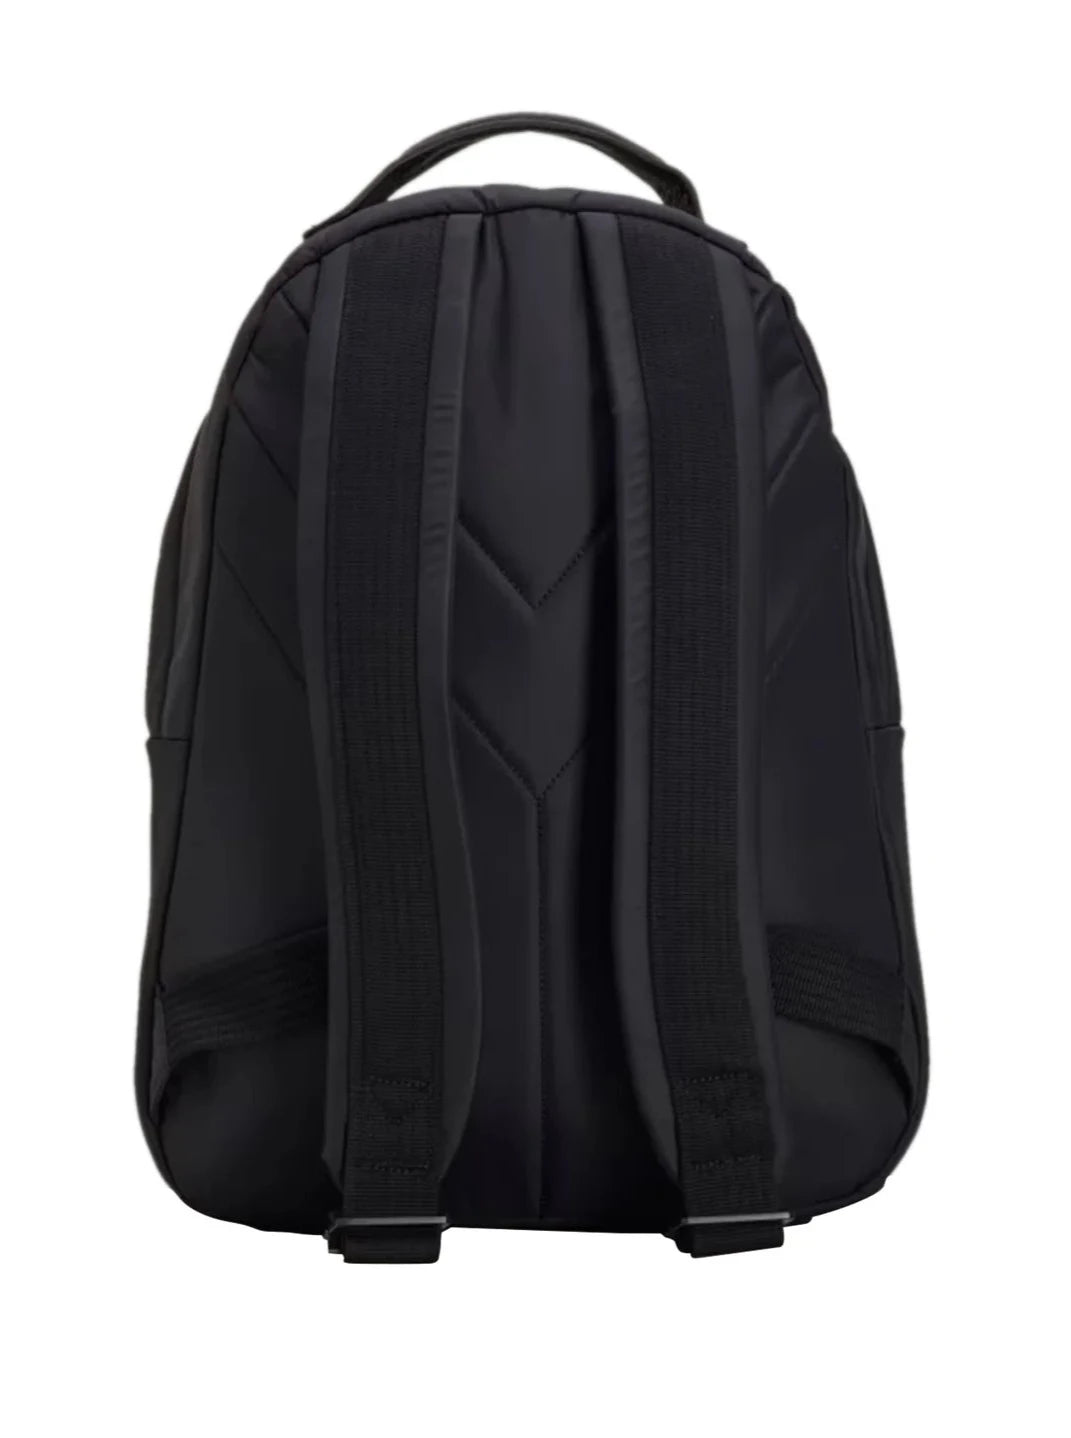 Y-3 'Lux' Backpack